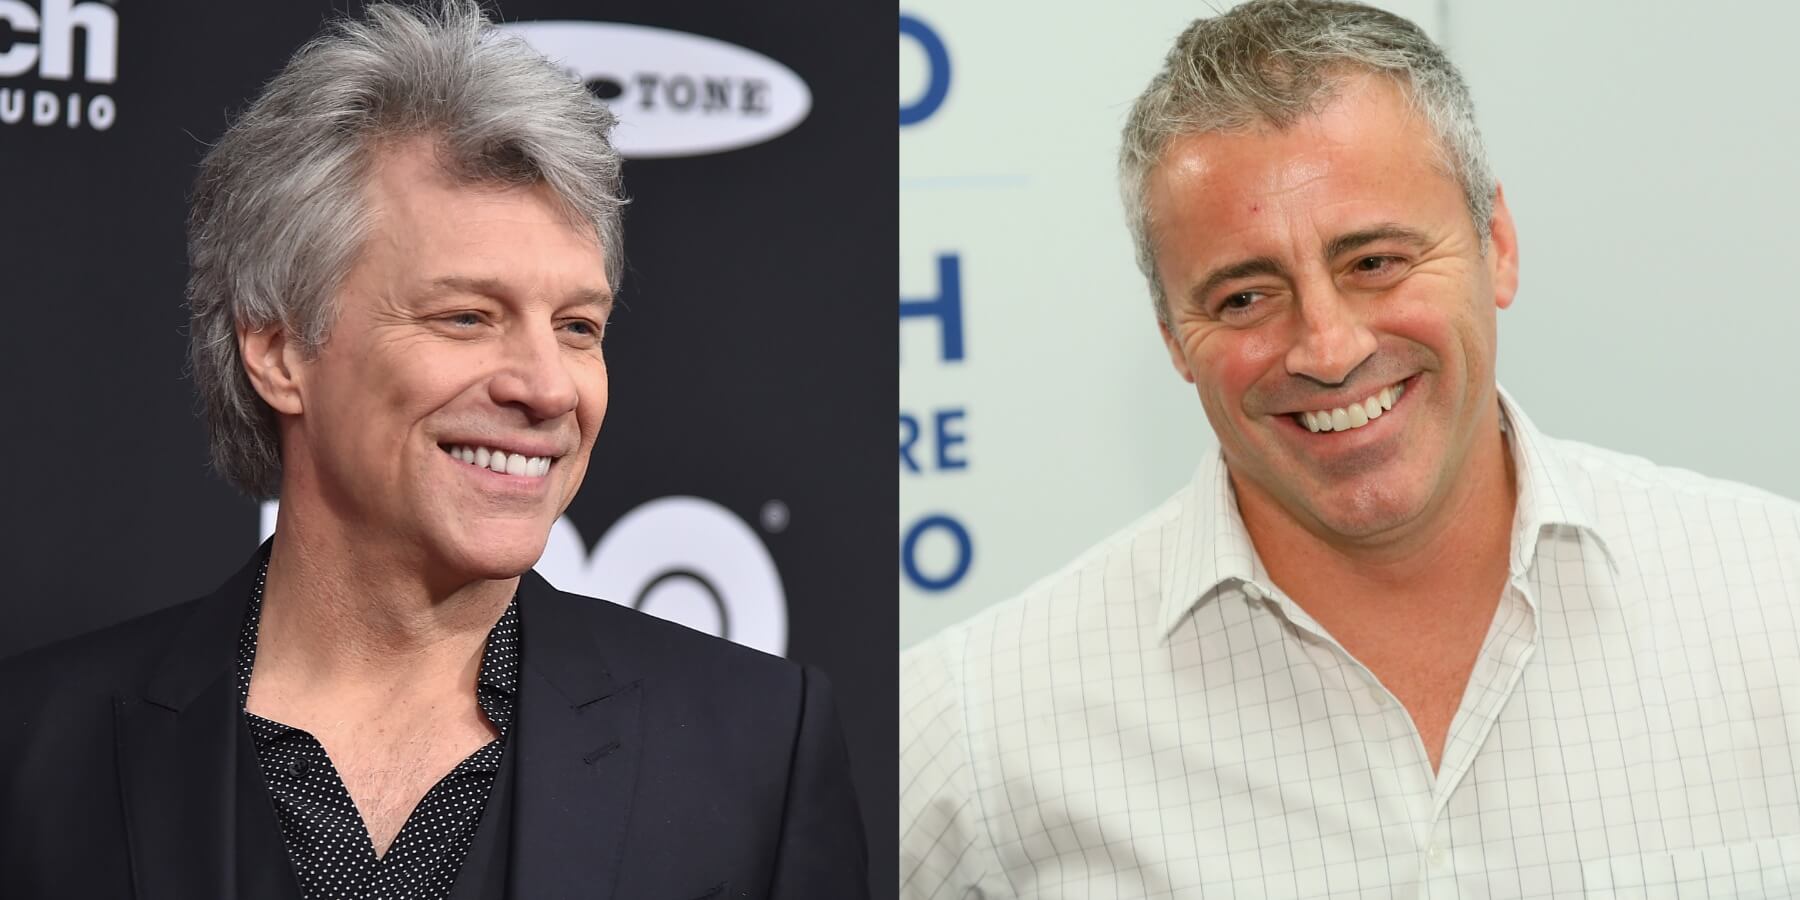 Jon Bon Jovi and Matt LeBlanc in side-by-side images